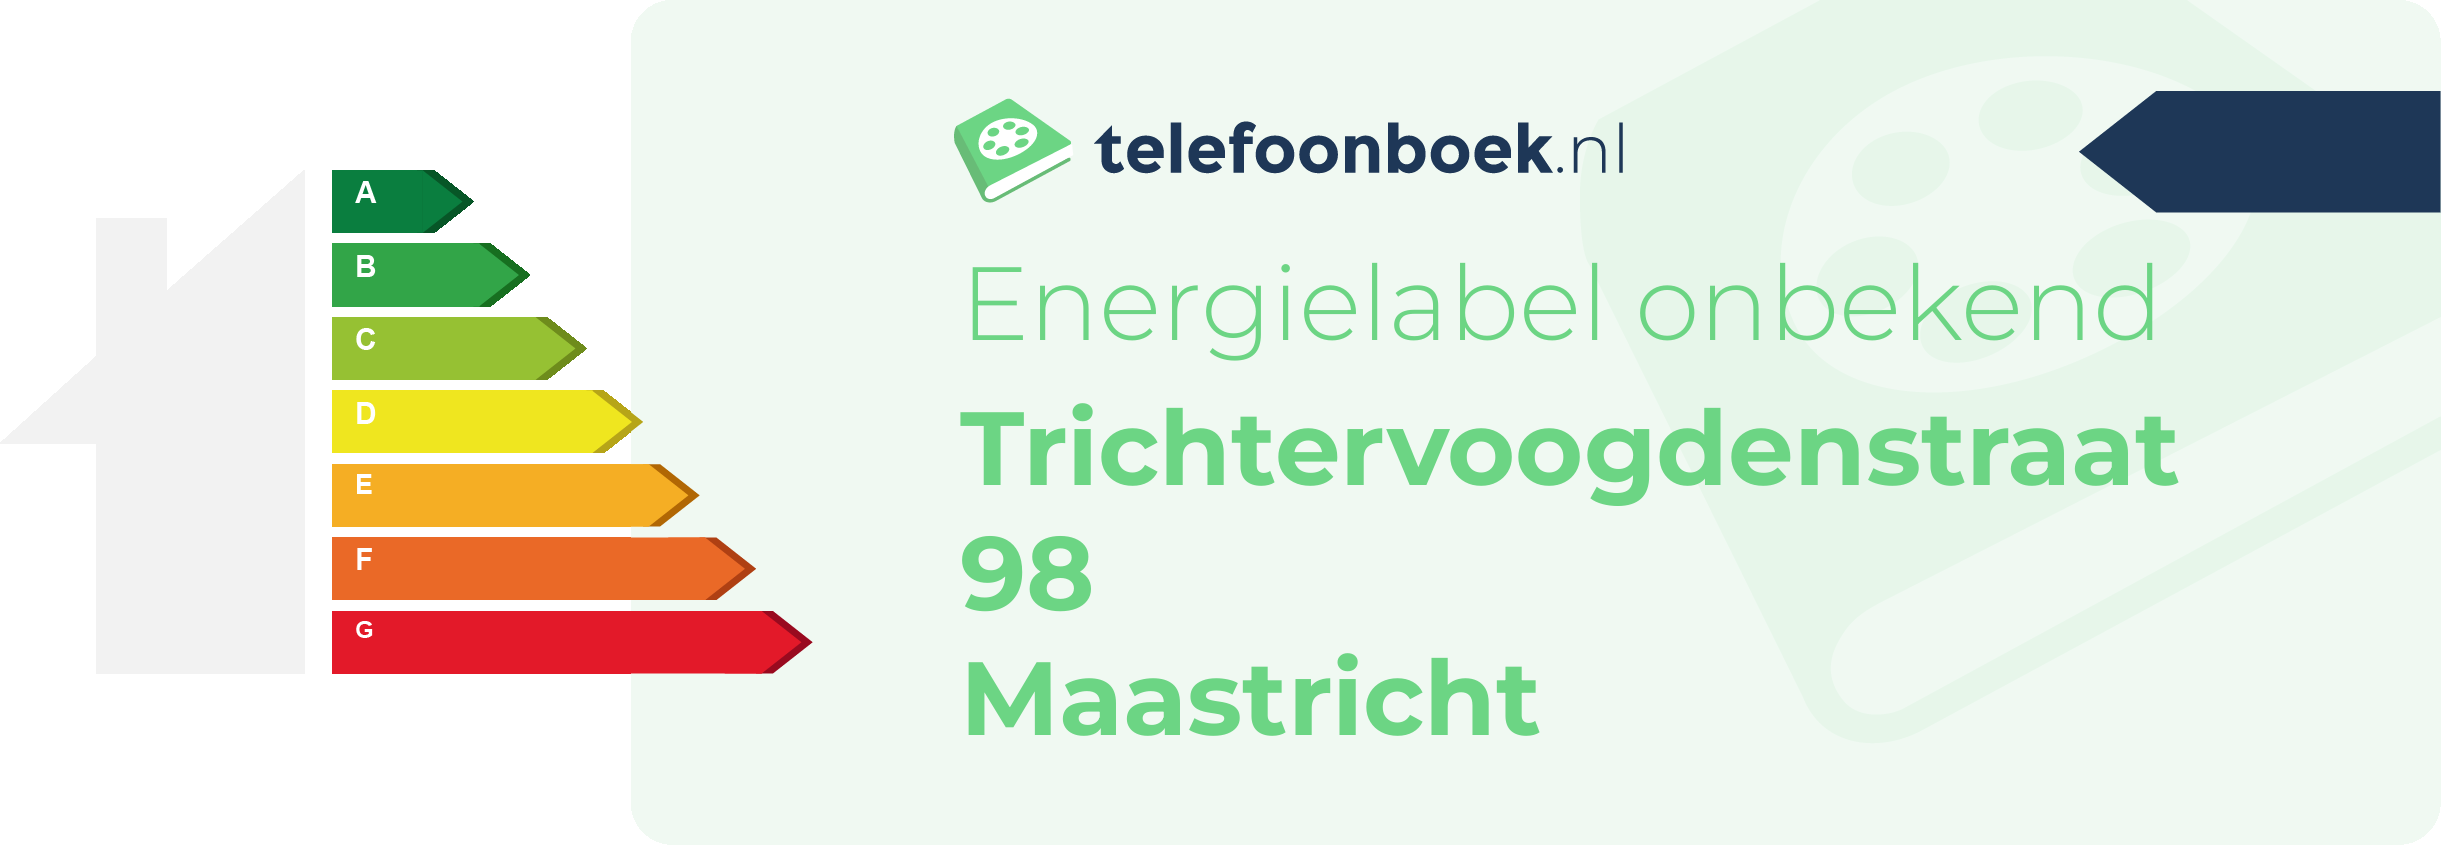 Energielabel Trichtervoogdenstraat 98 Maastricht